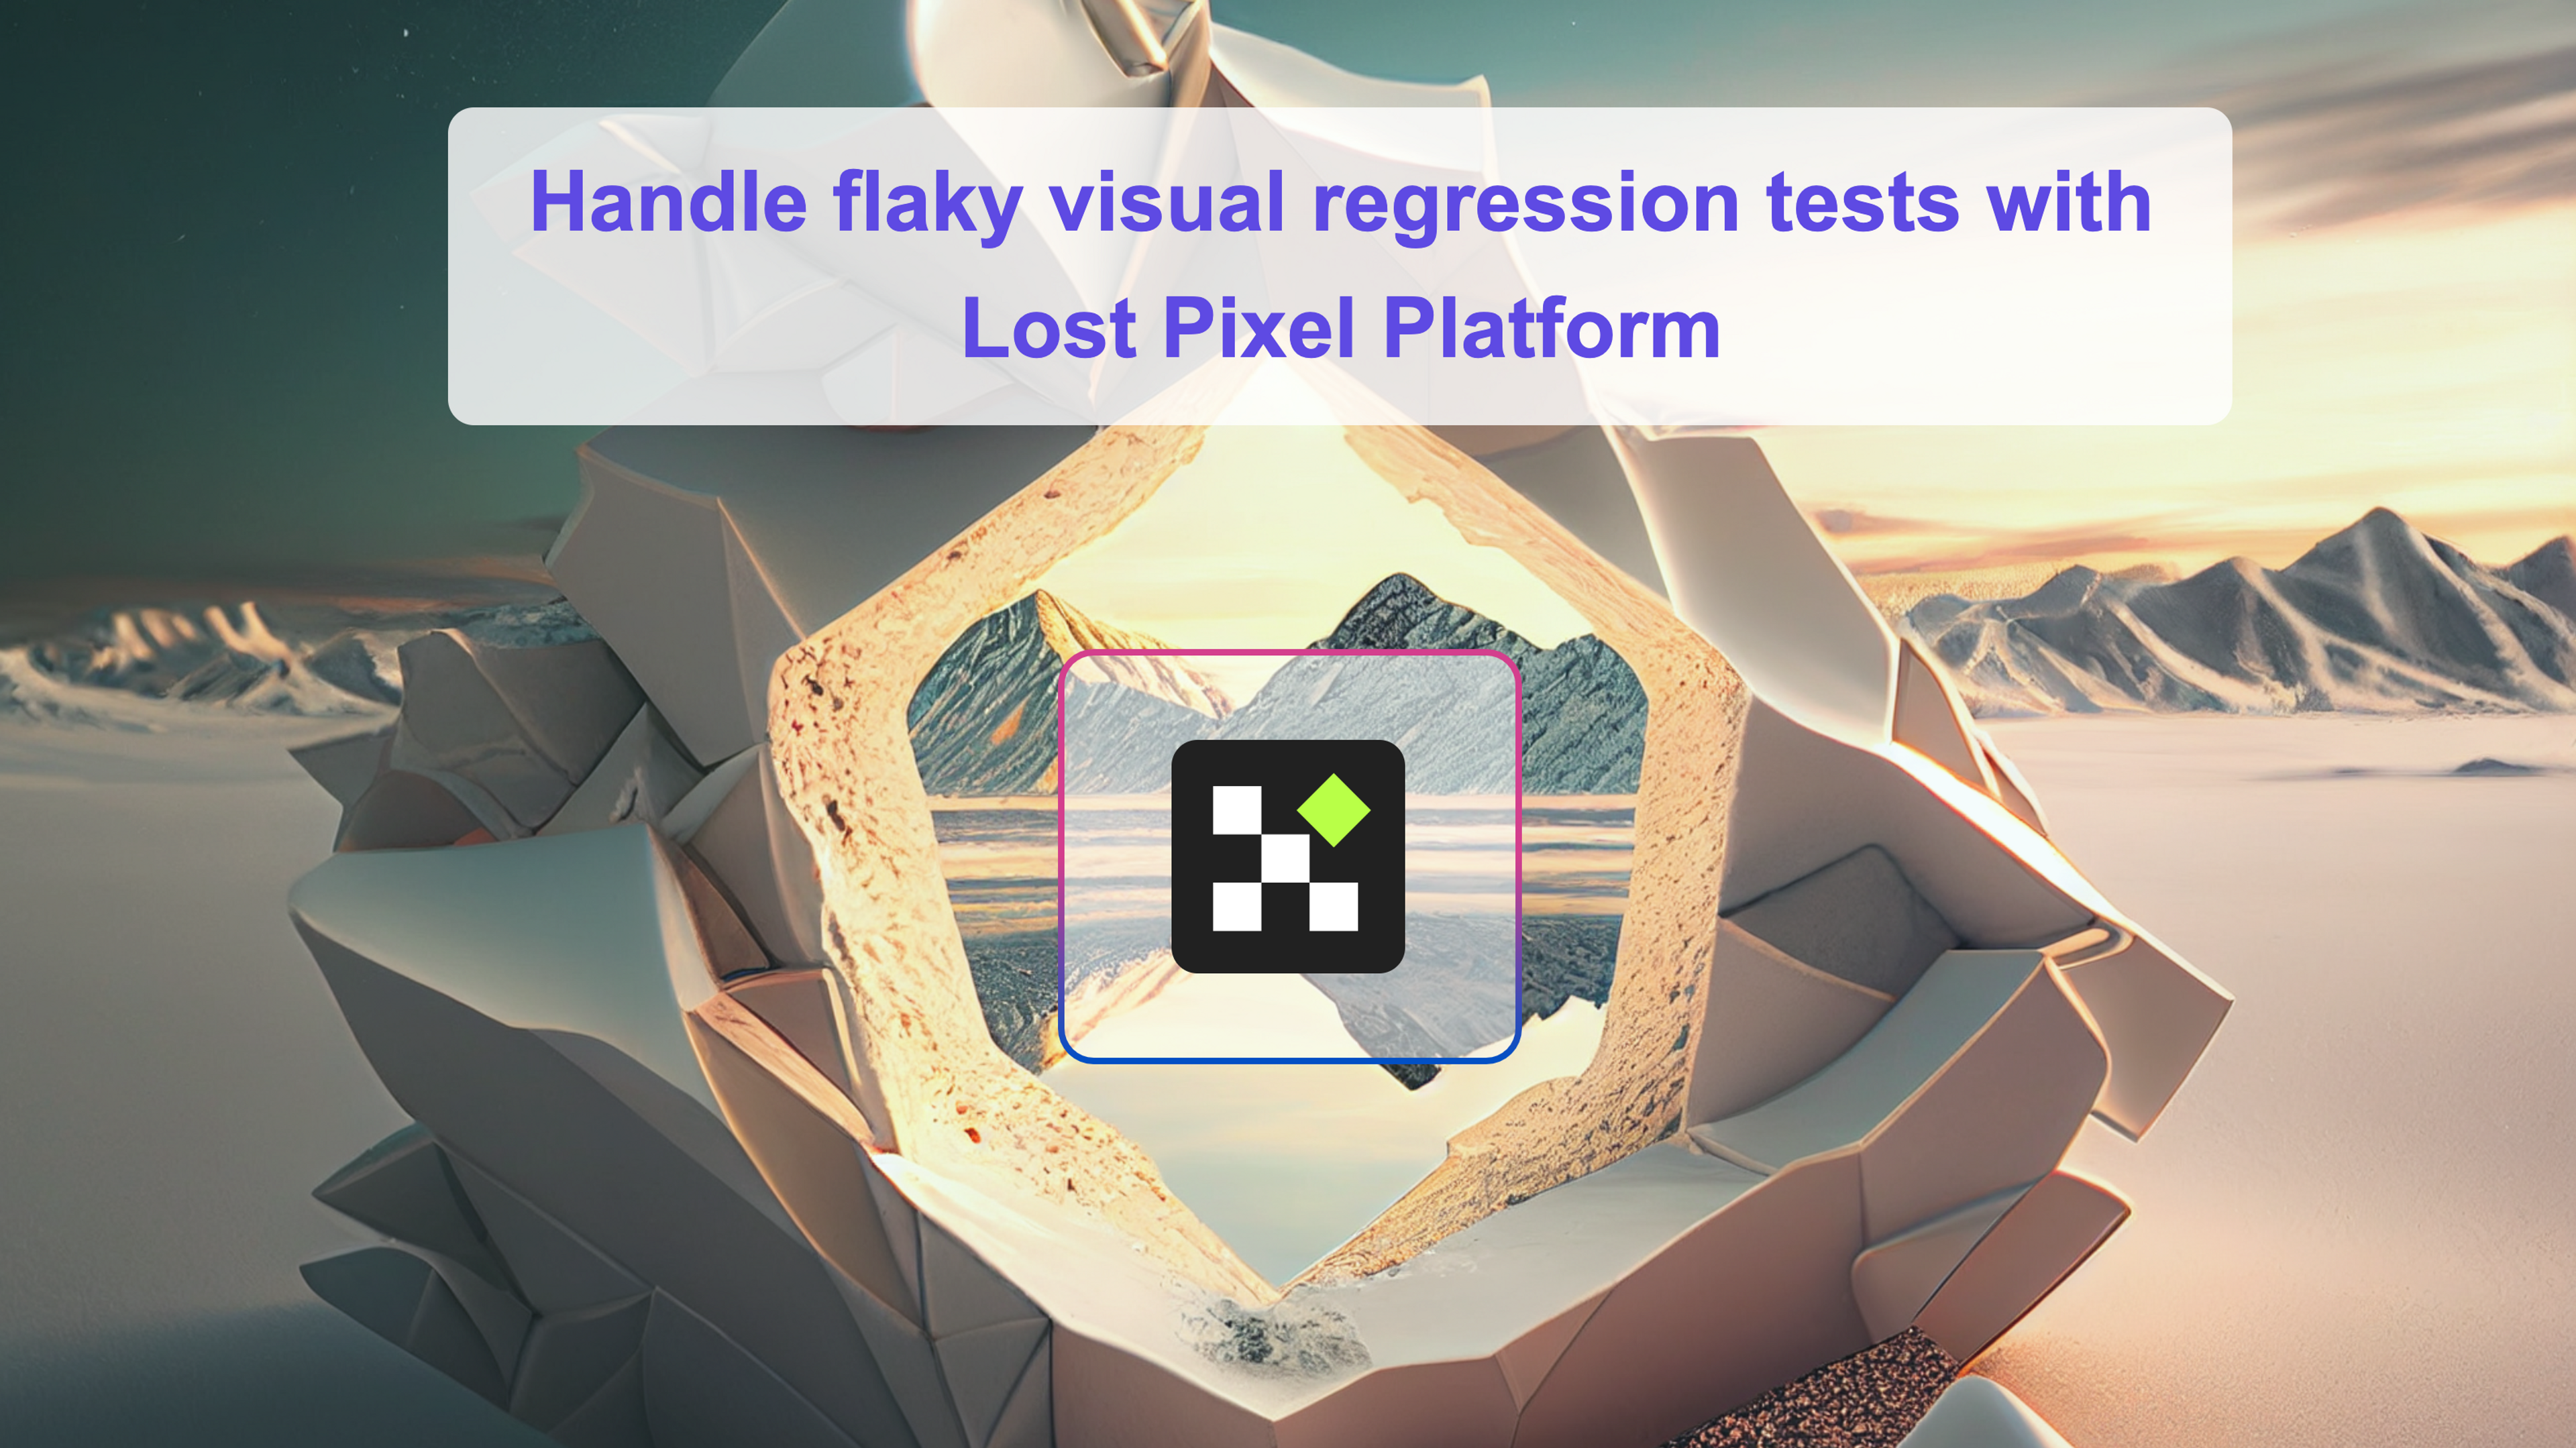 Flaky visual regression tests